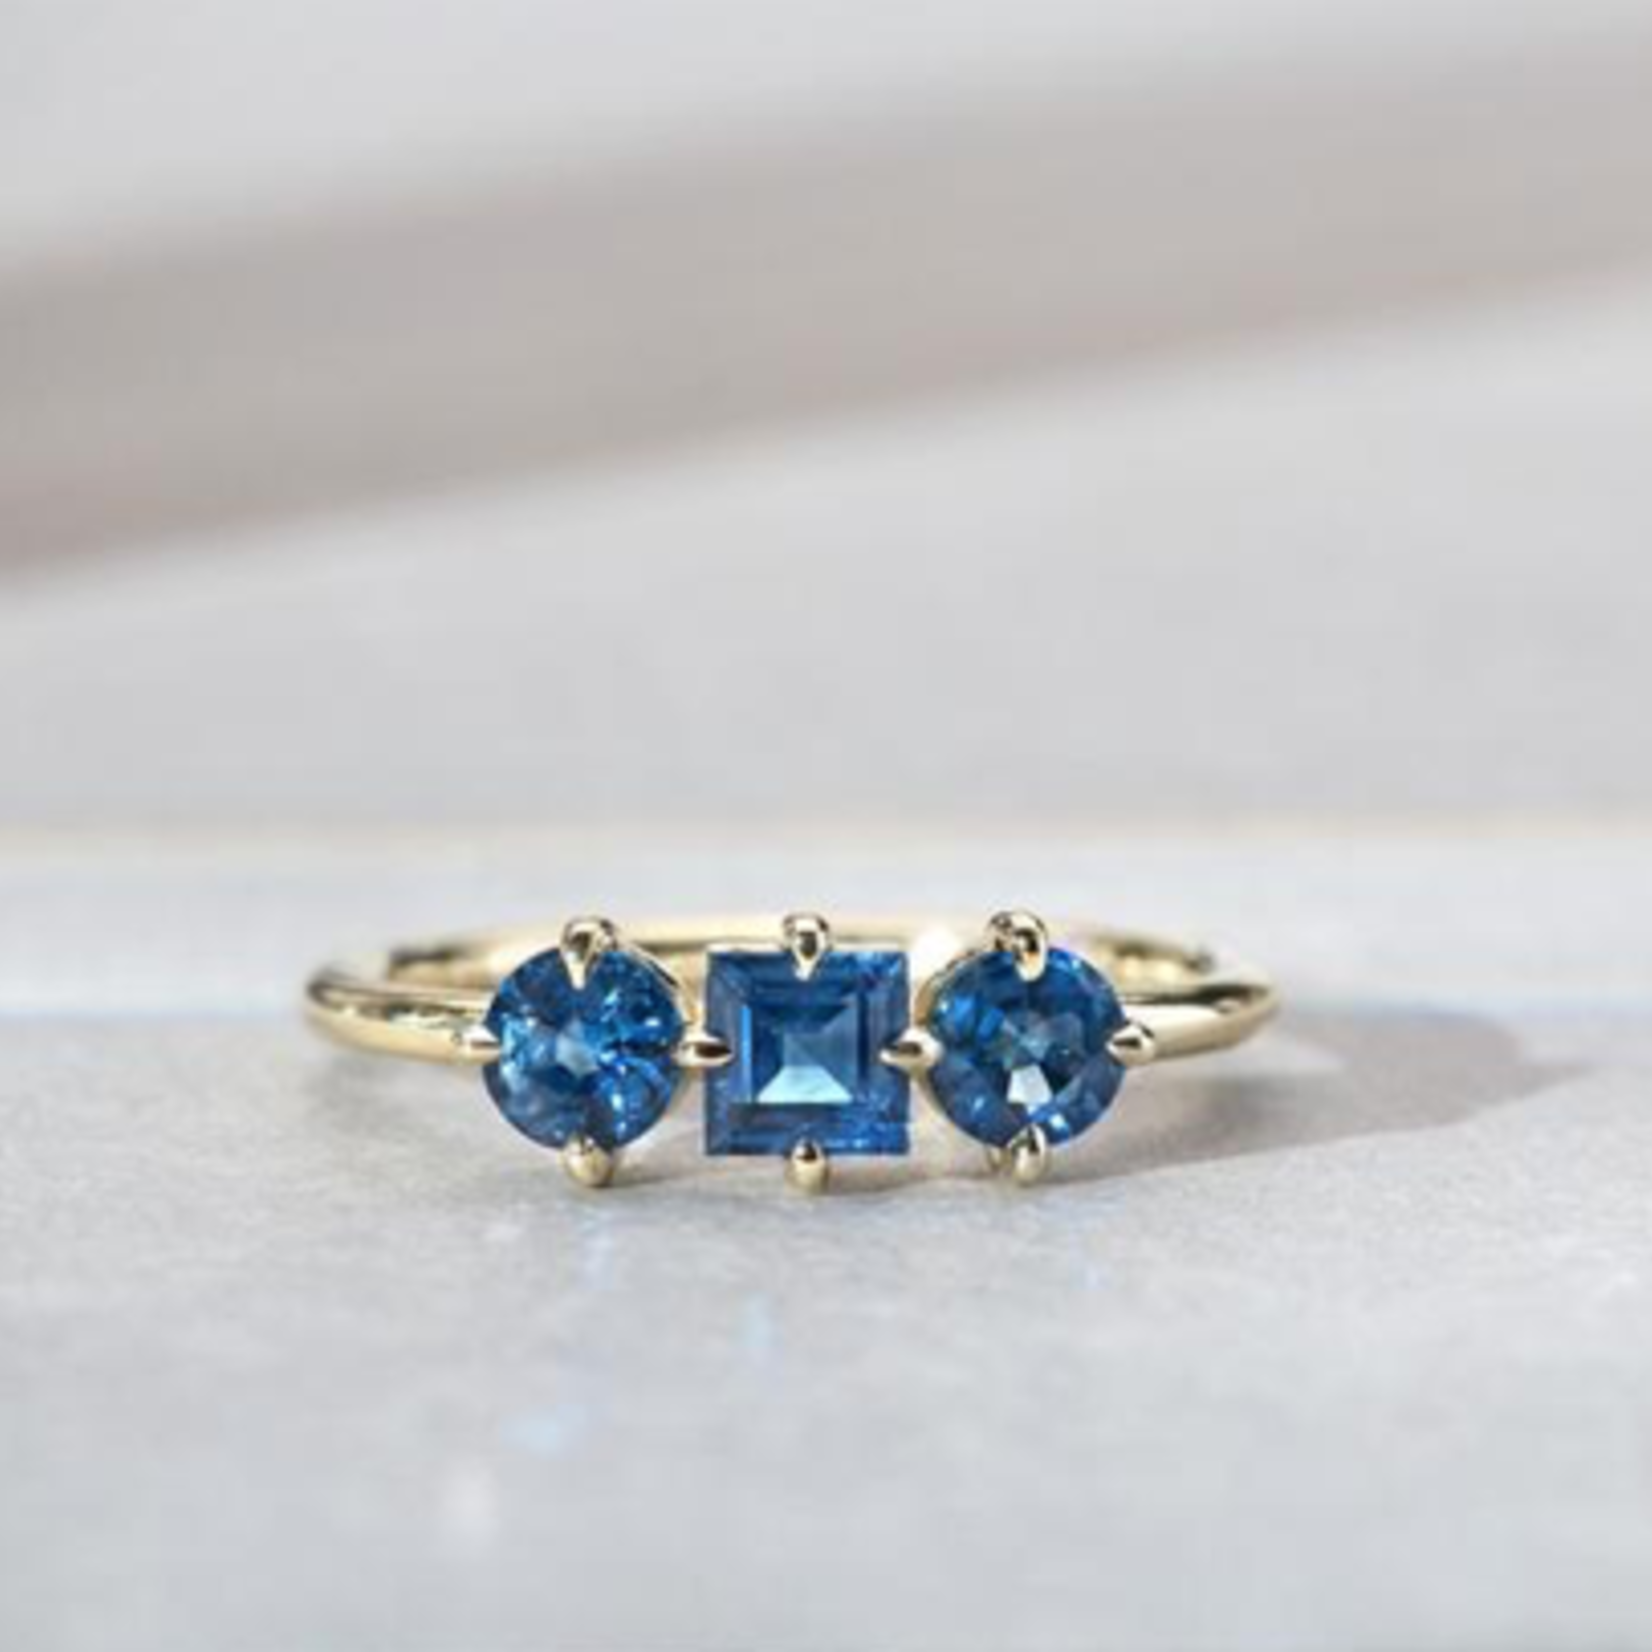 ILA Trilogy Blue Sapphire Ring 14KY- Size 6 1/2